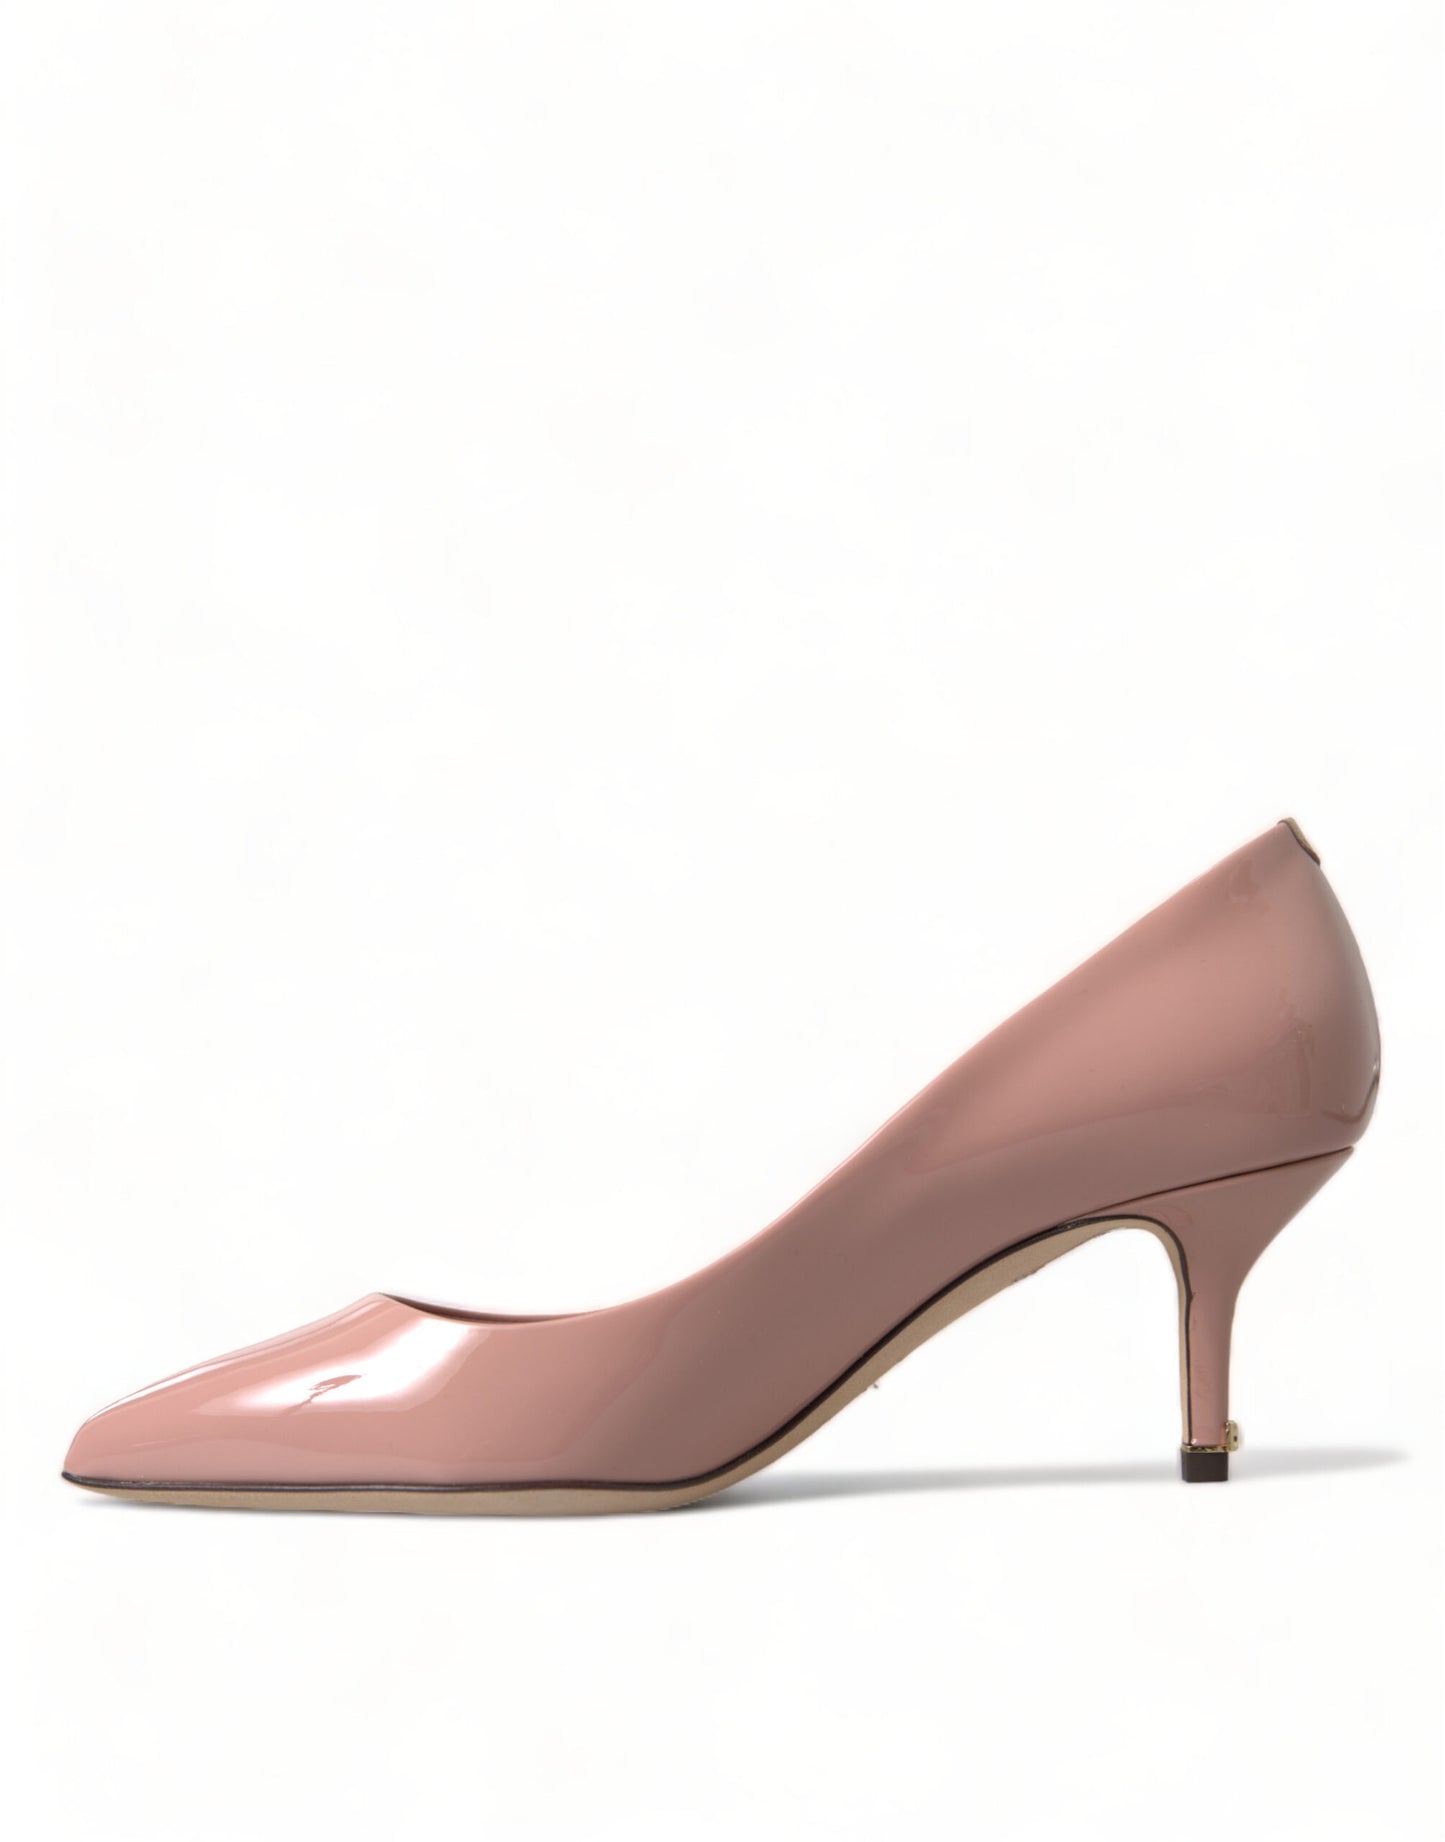 Dolce & Gabbana Pink Patent Leather Pumps Heels Shoes - DEA STILOSA MILANO